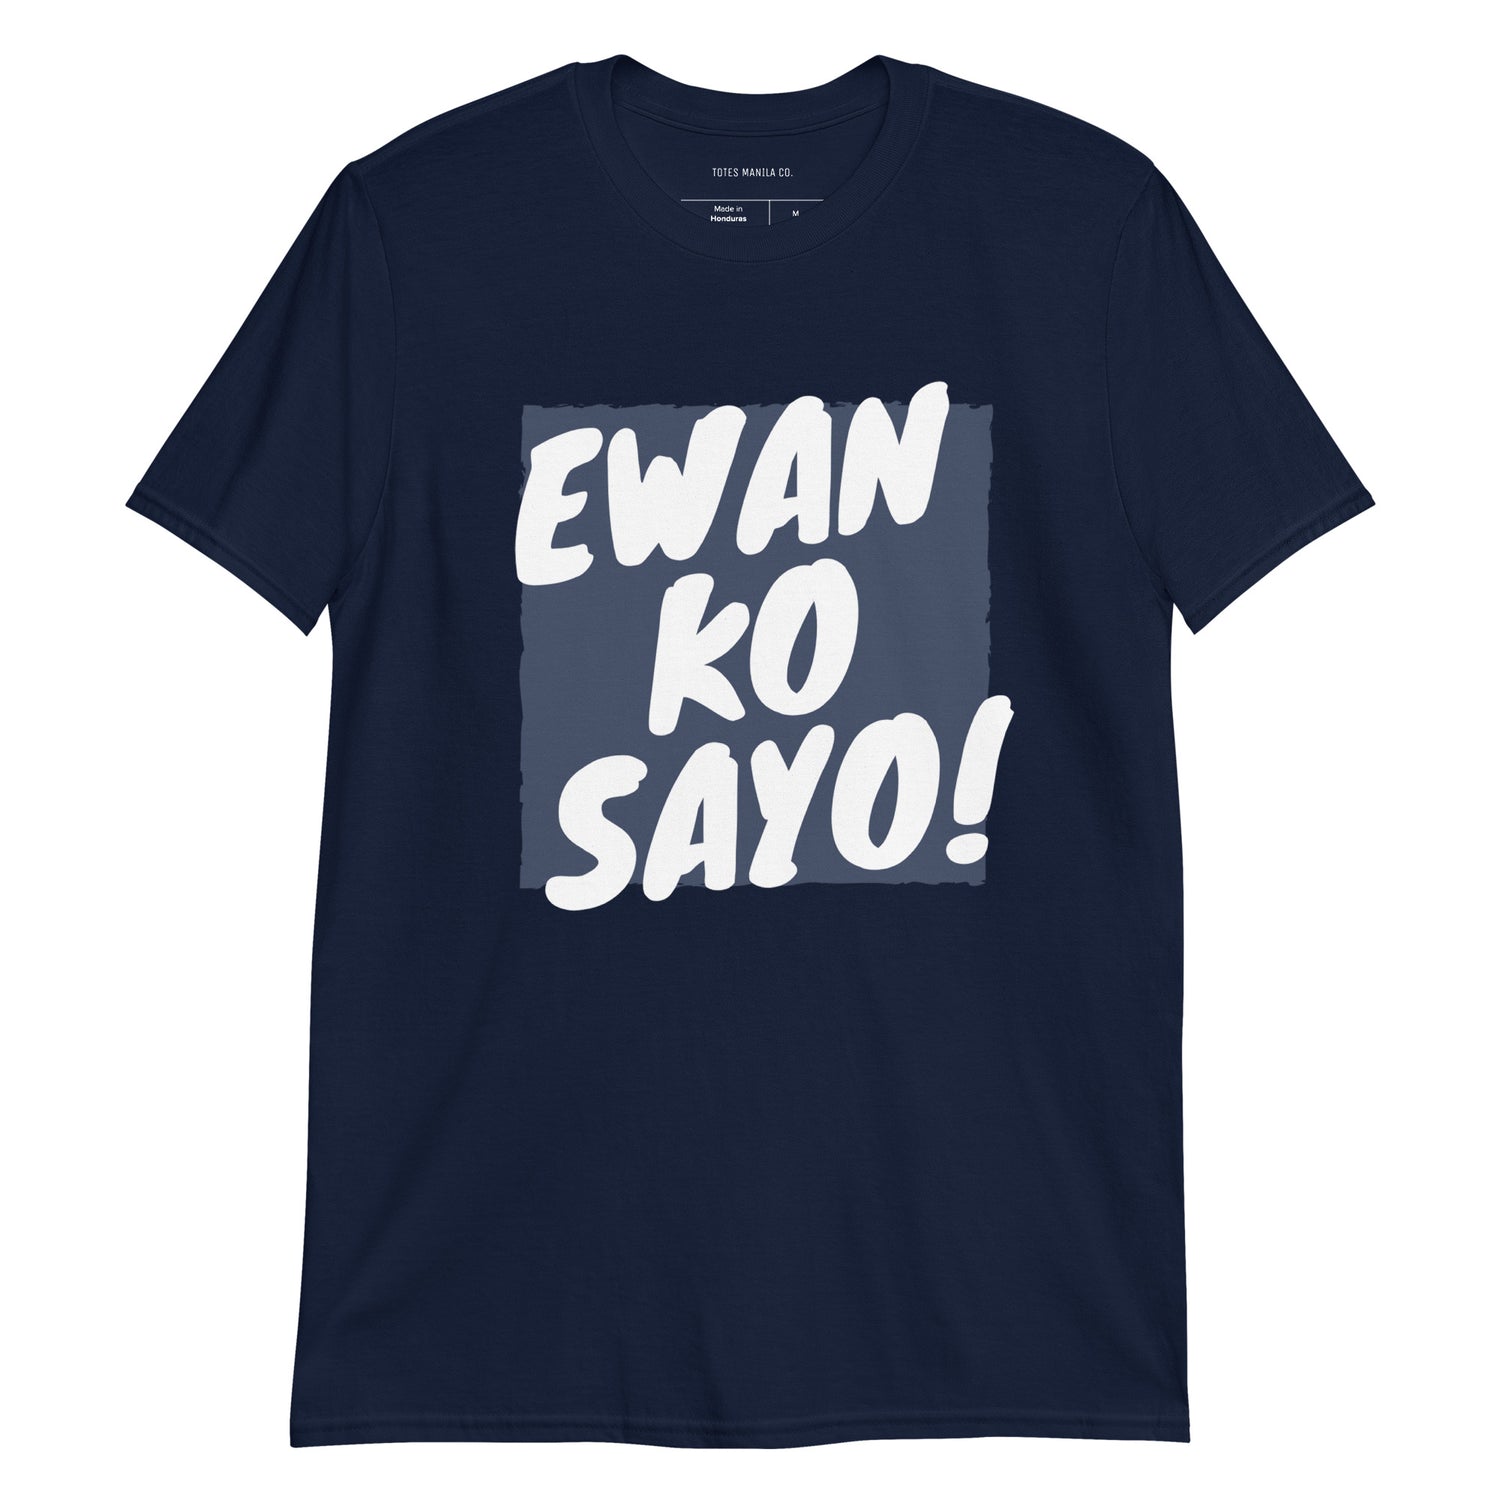 Filipino Shirt Ewan Ko Sayo! Funny Merch in color variant Navy